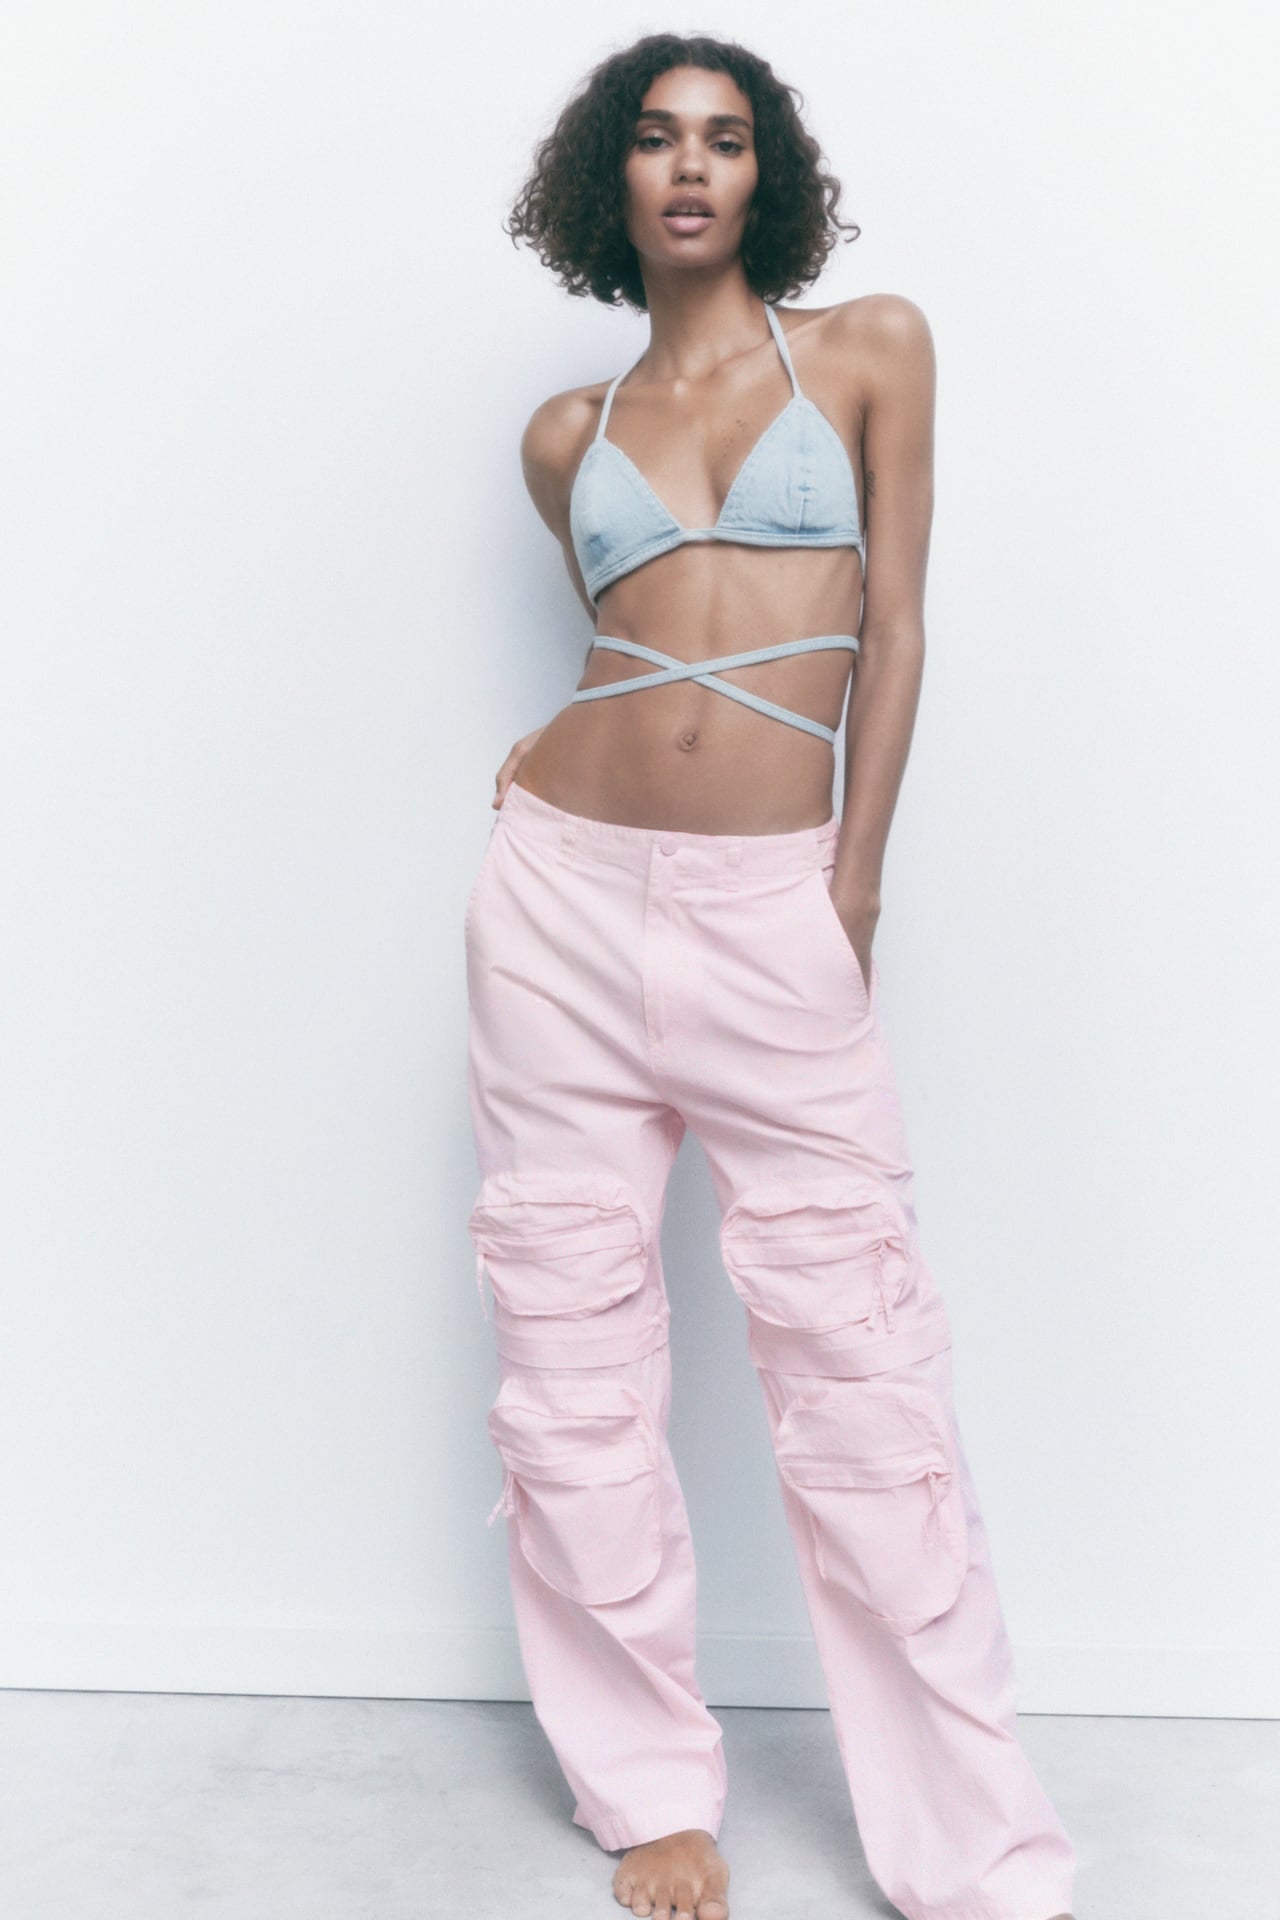 Stylish ZARA Pink Cargo Trousers with Pockets